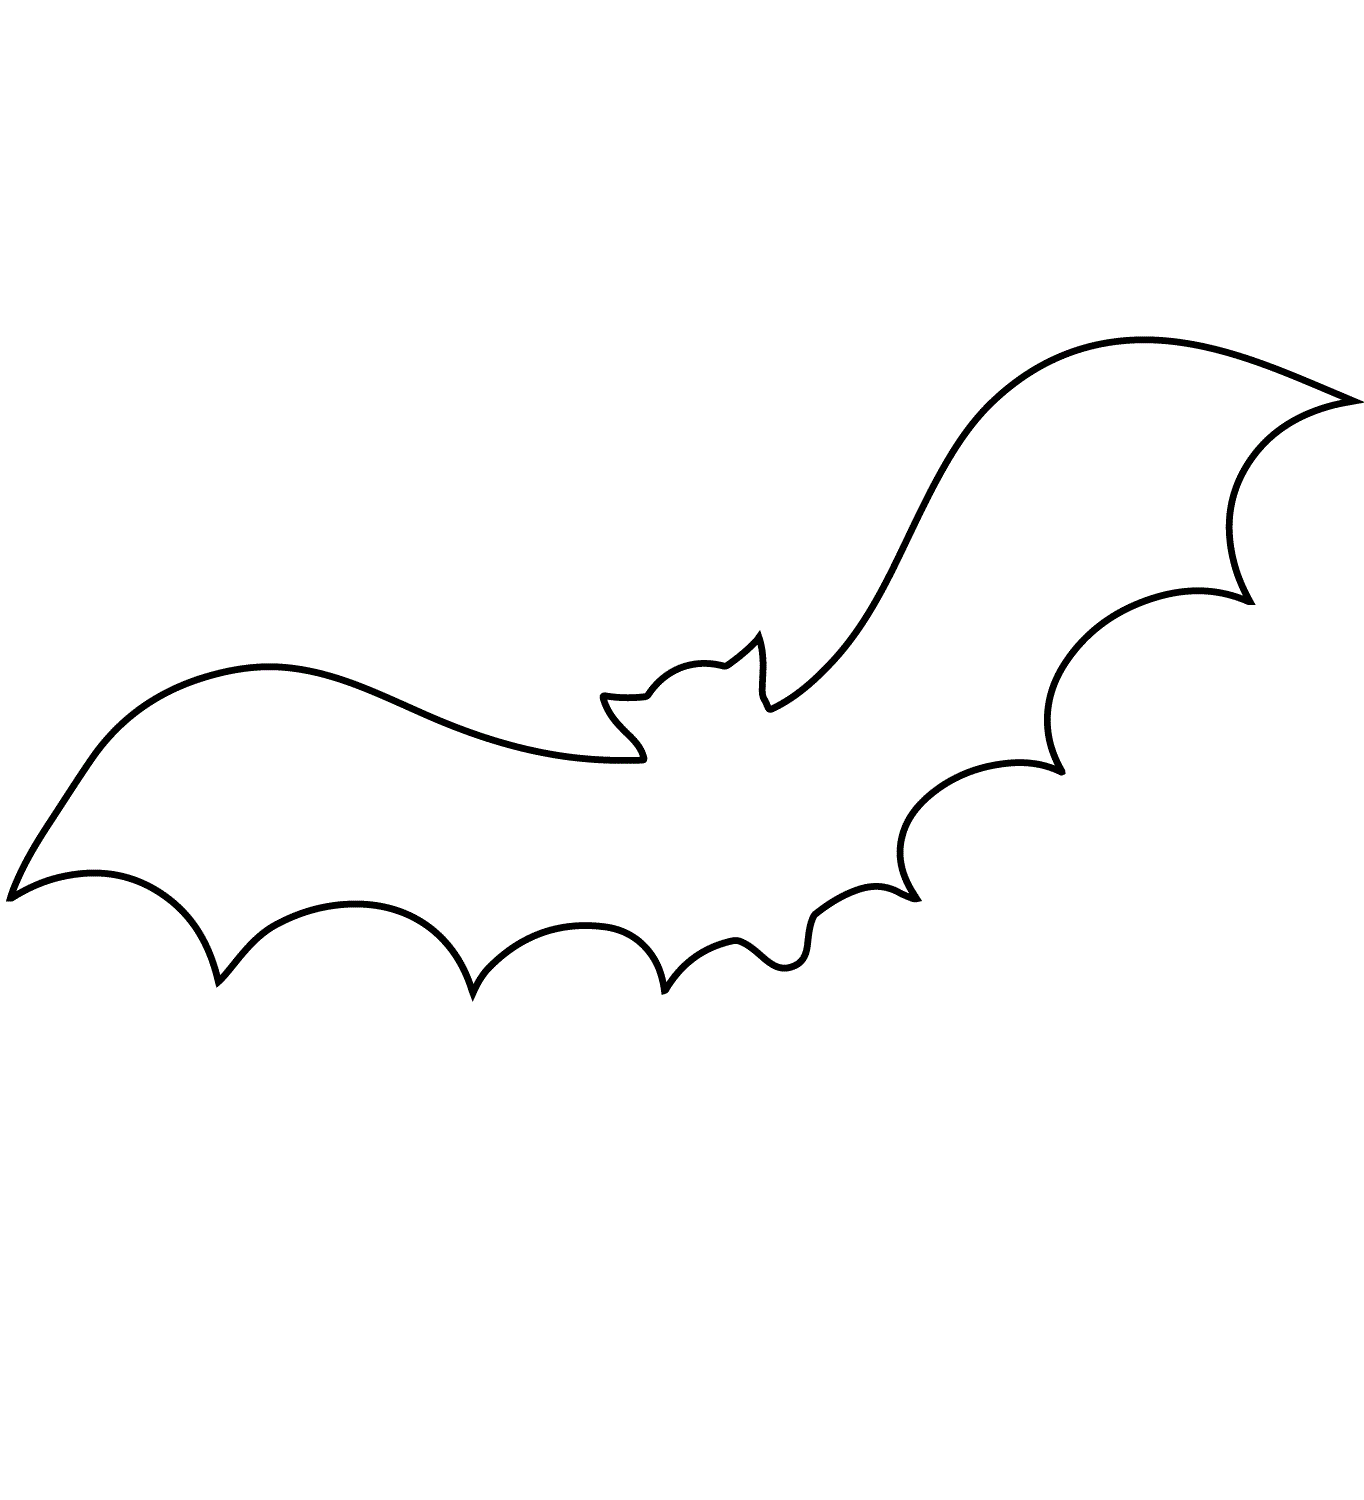 Draw Bat Image Coloring Page